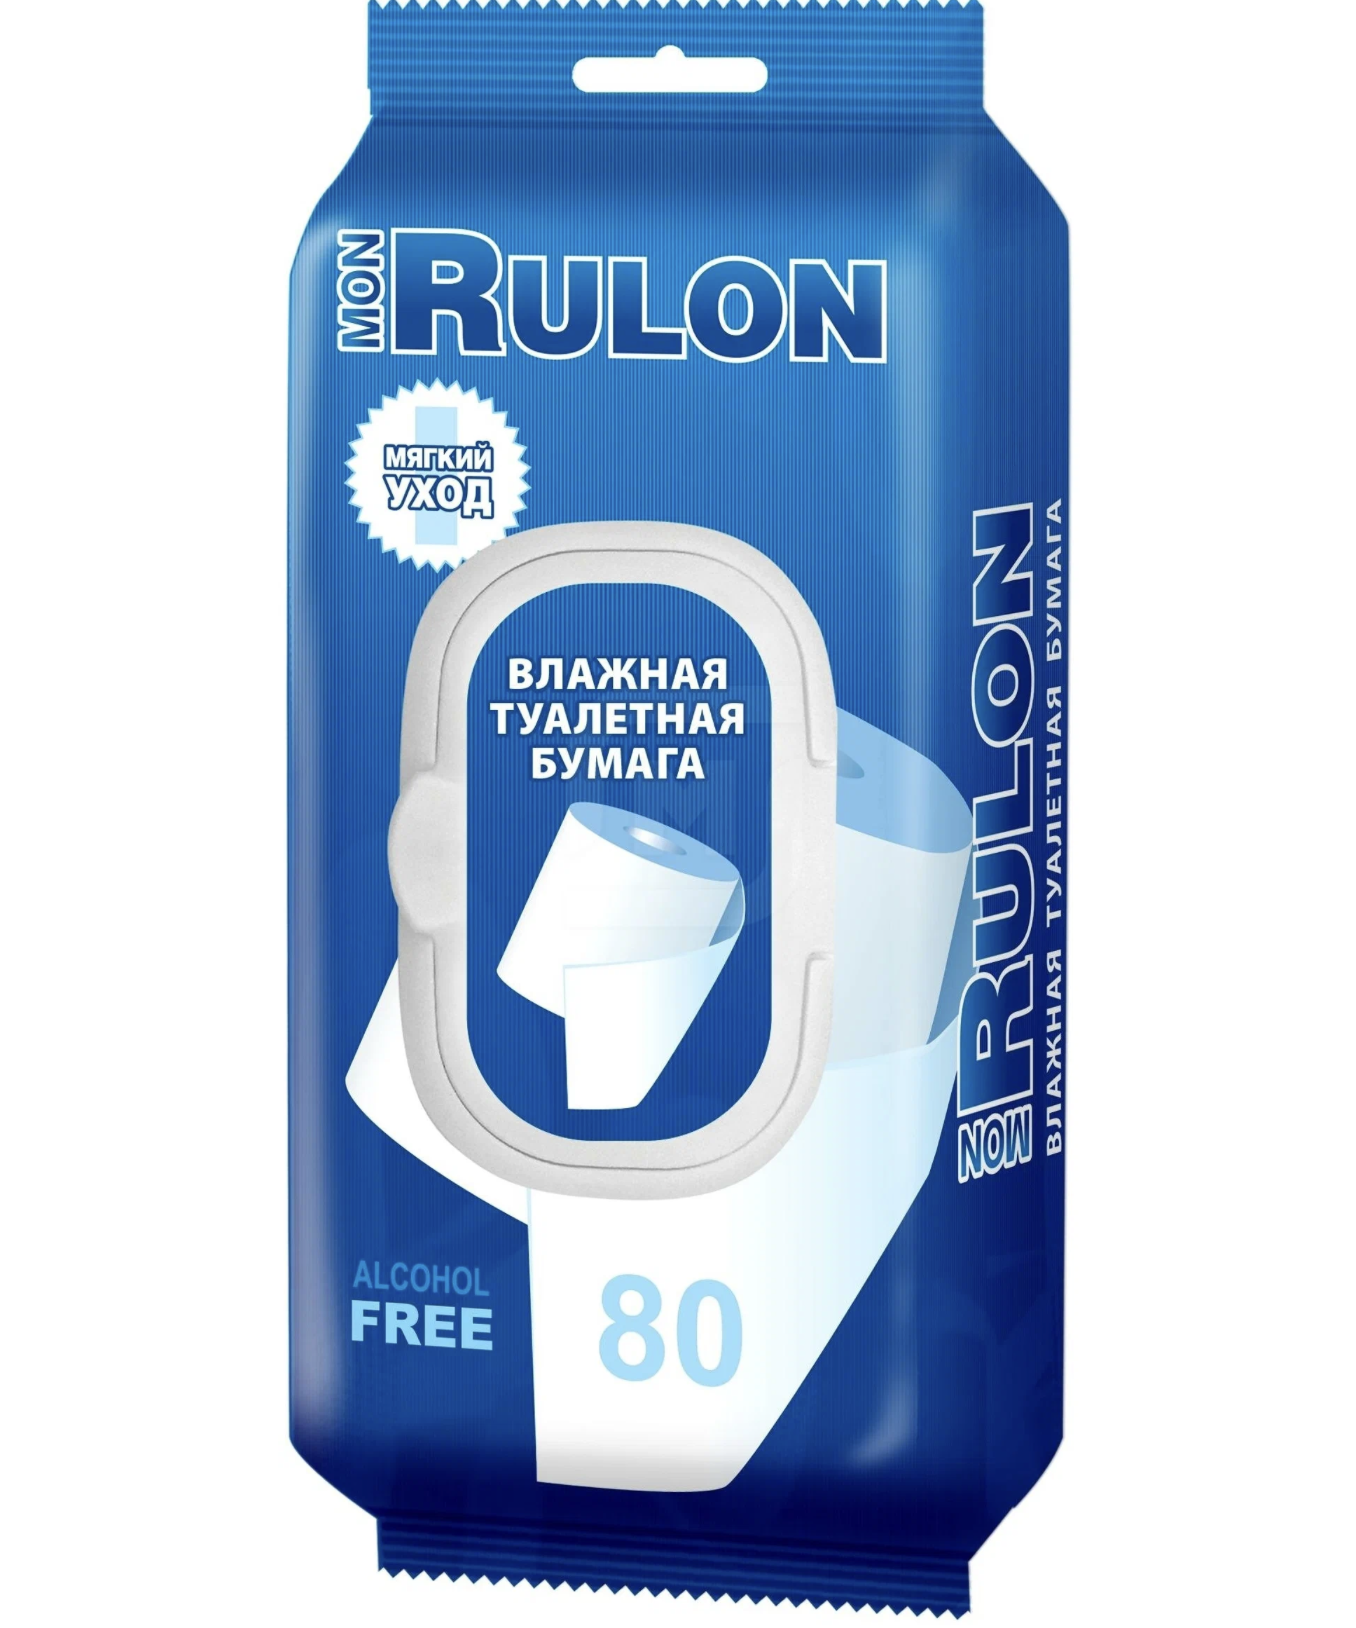    / Mon Rulon -        80 